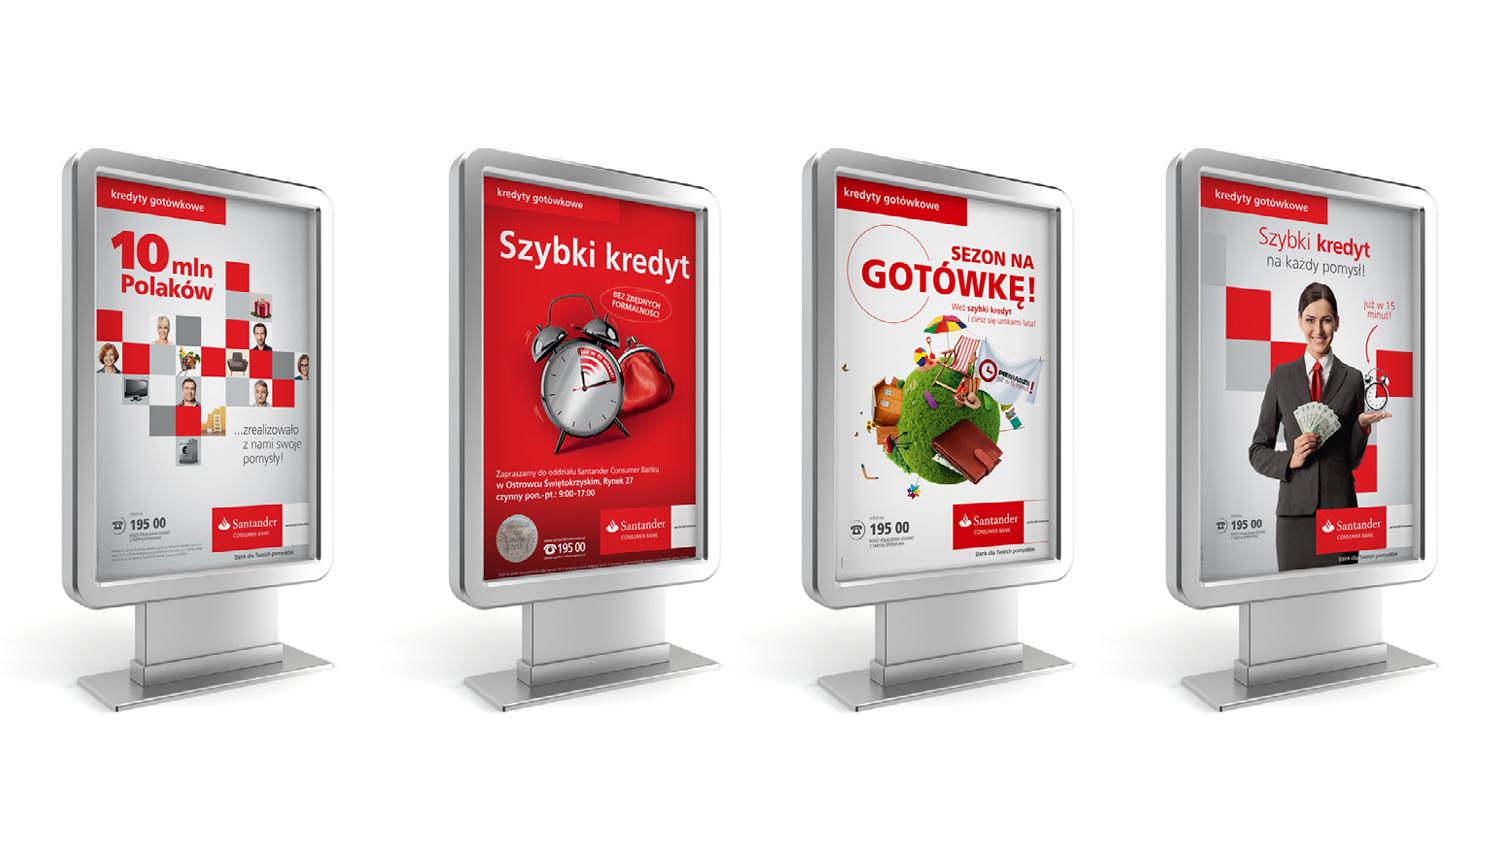 Eskadra - Comprehensive brand service in the Polish market - Santander Consumer Bank